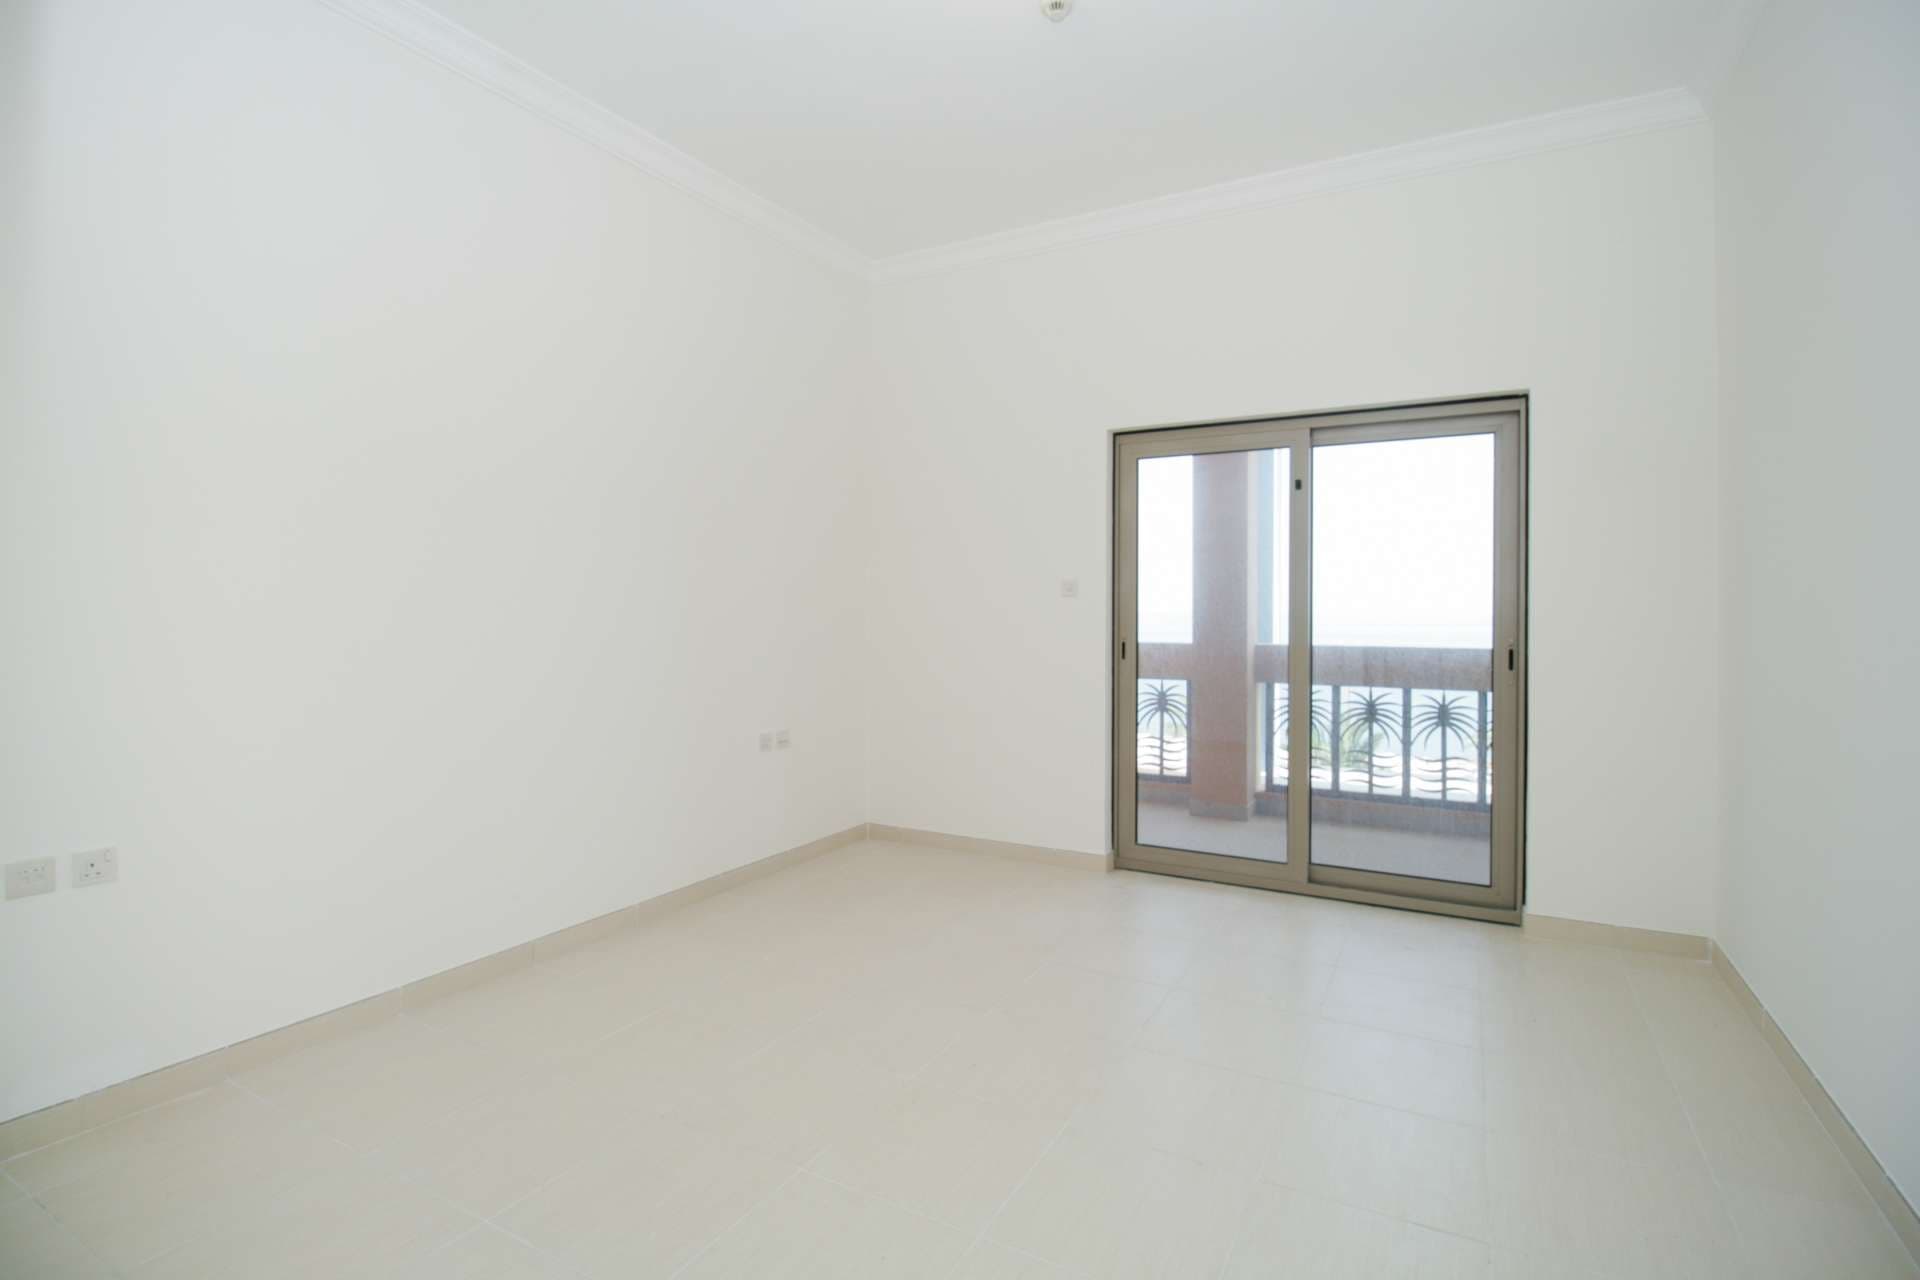 2 Bedroom Apartment For Sale Sarai Apartments Lp04852 1c258fc7baf5130.jpg